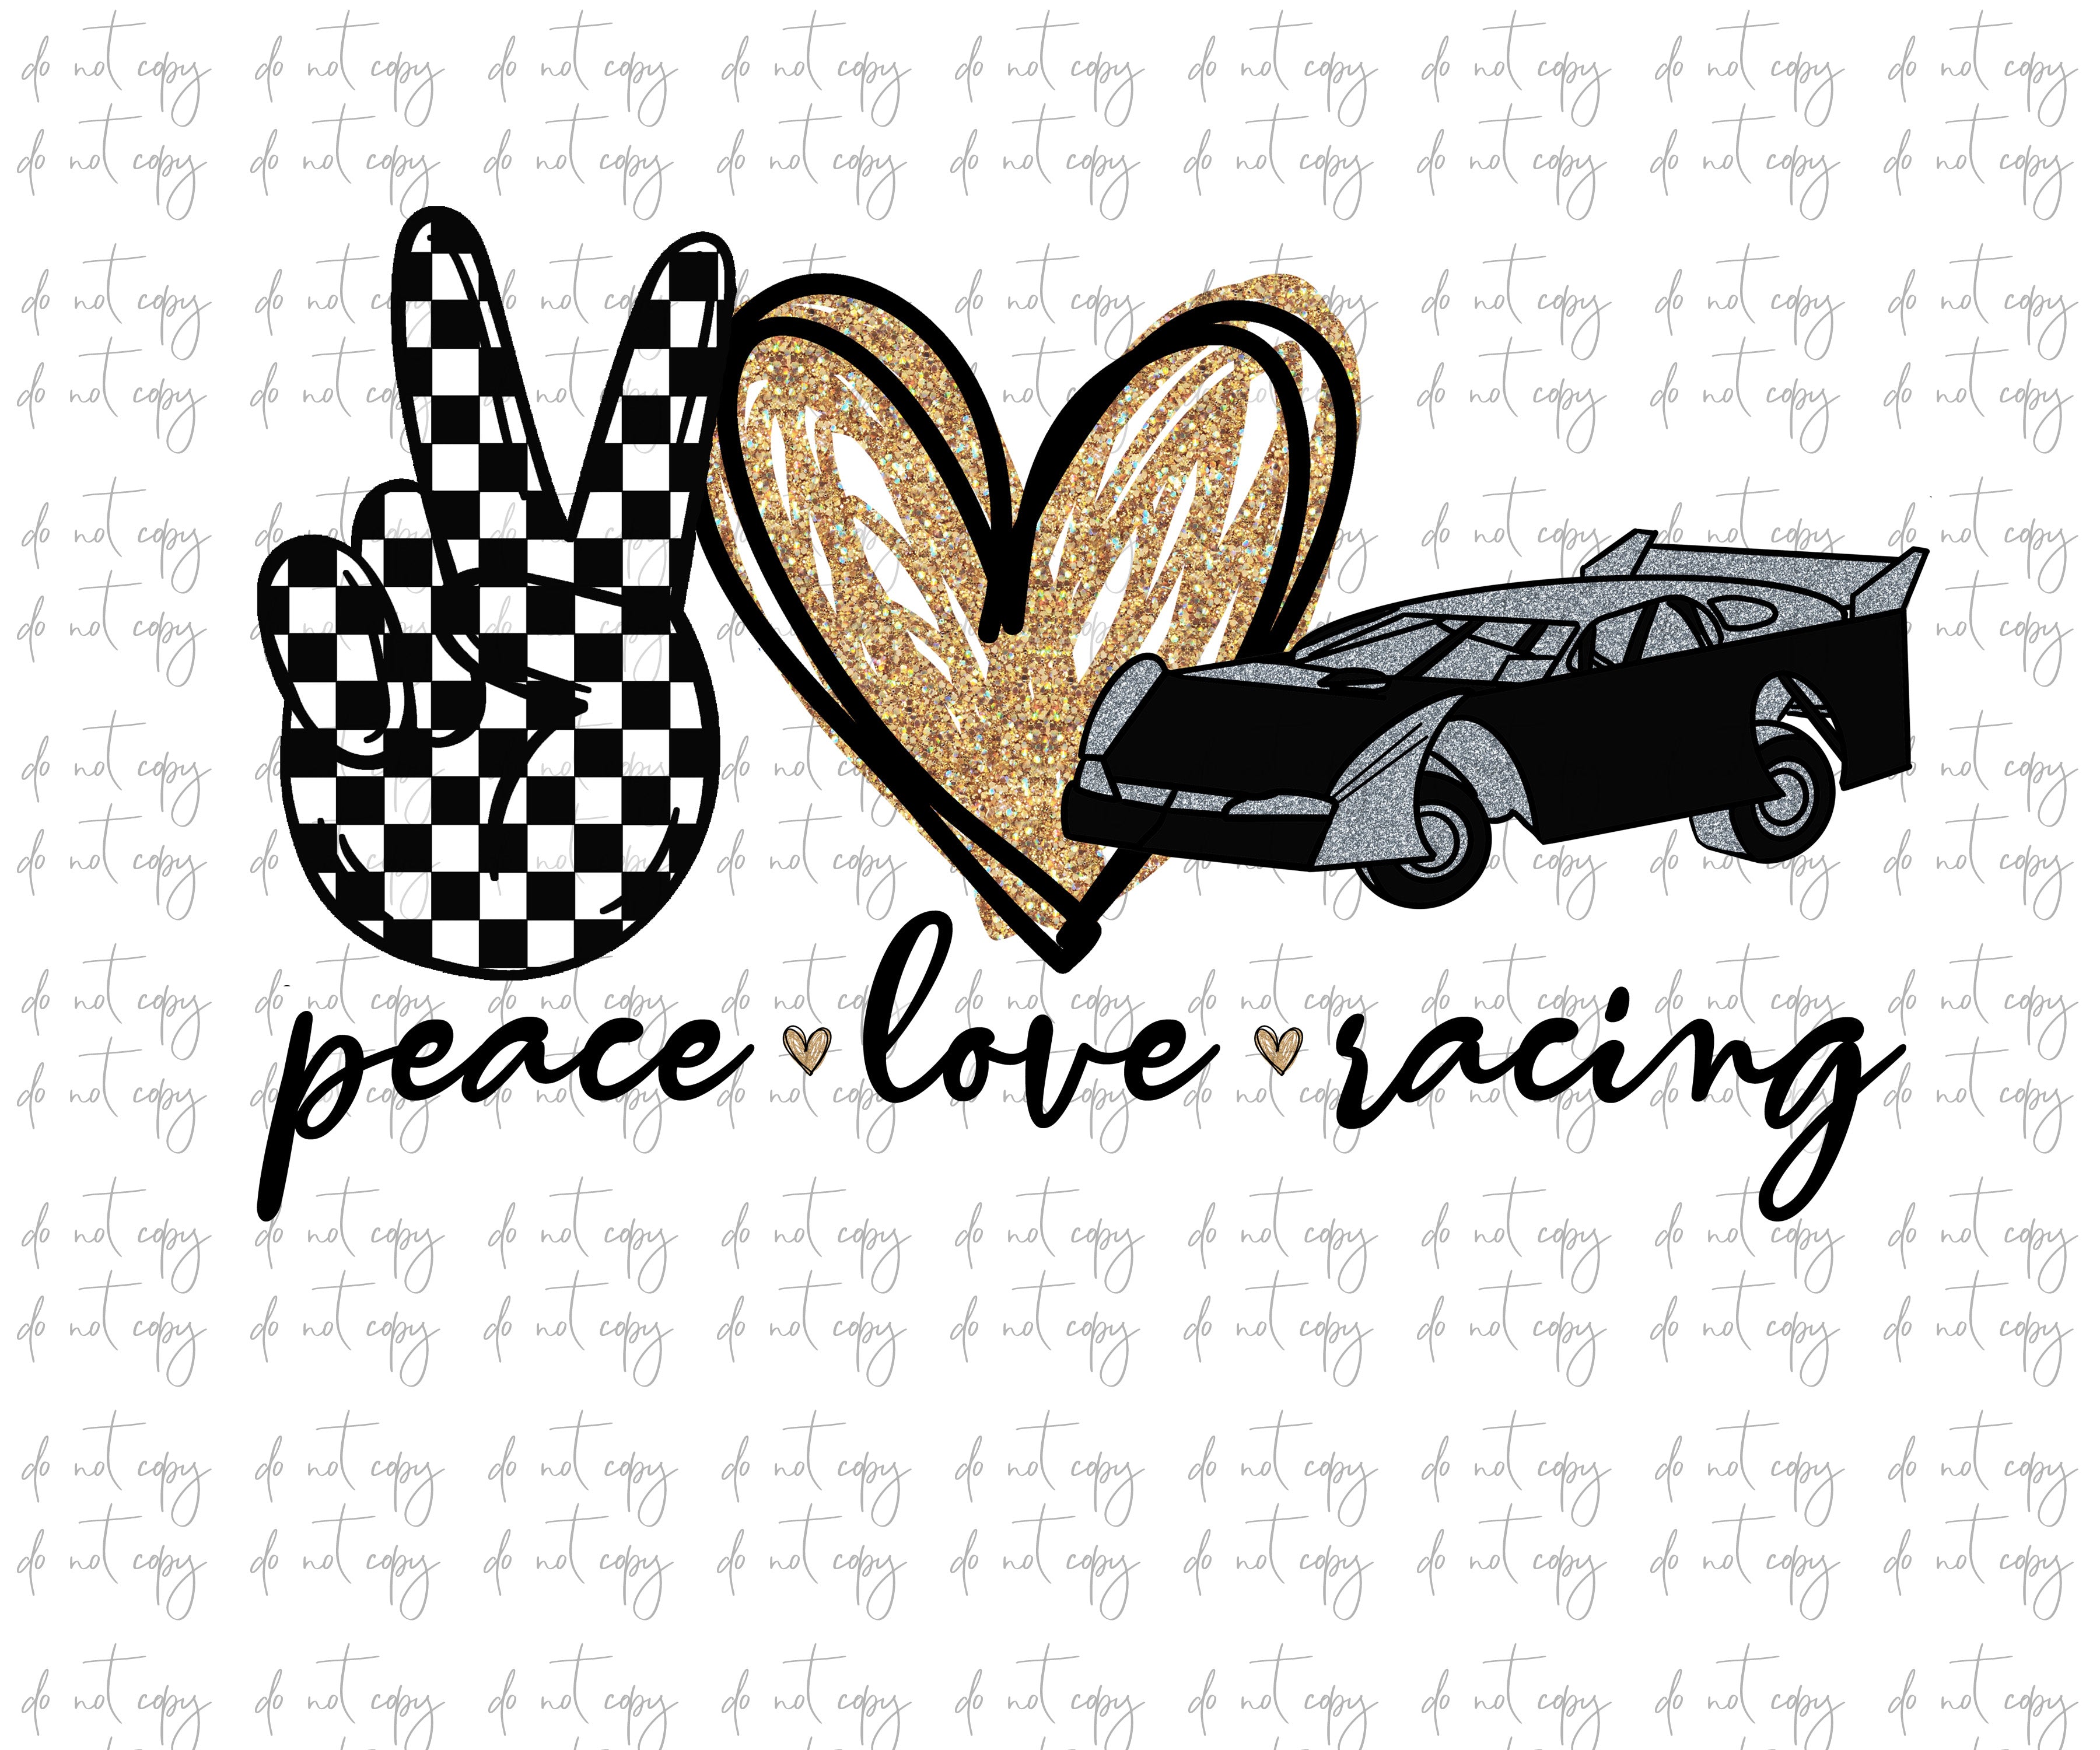 Download Peace Love Racing Checkered Flag Sublimation Png Digital Download Dir Tovars Digital Designs